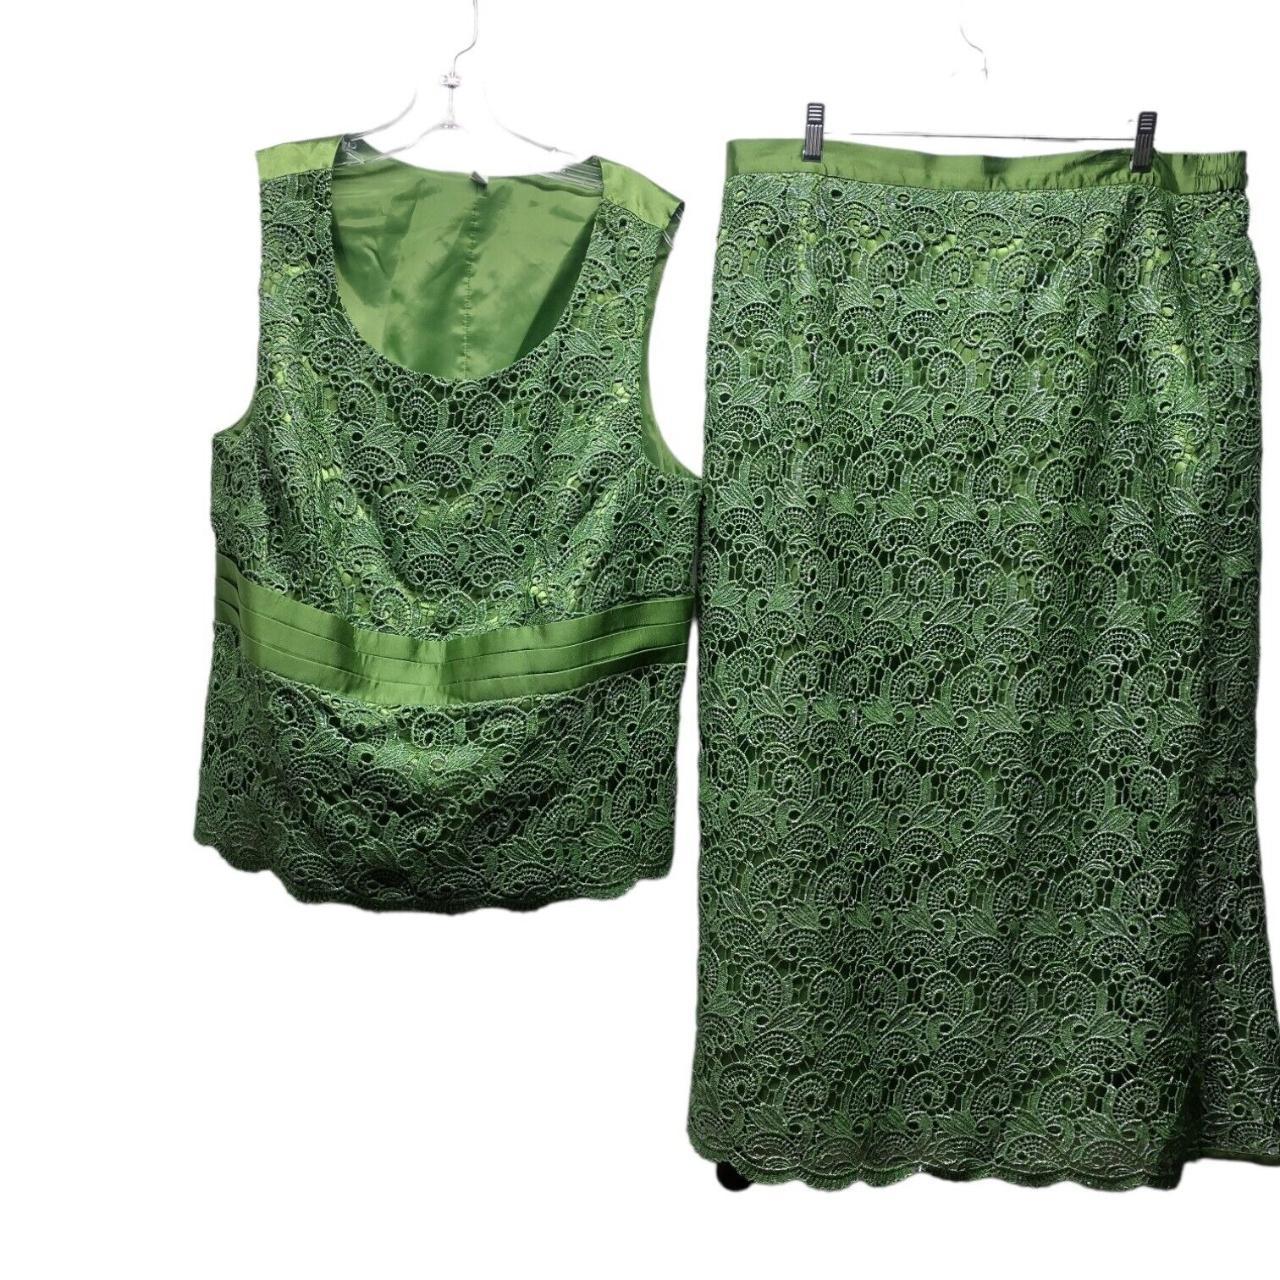 The Unbranded Brand Women's Green Dress | Depop